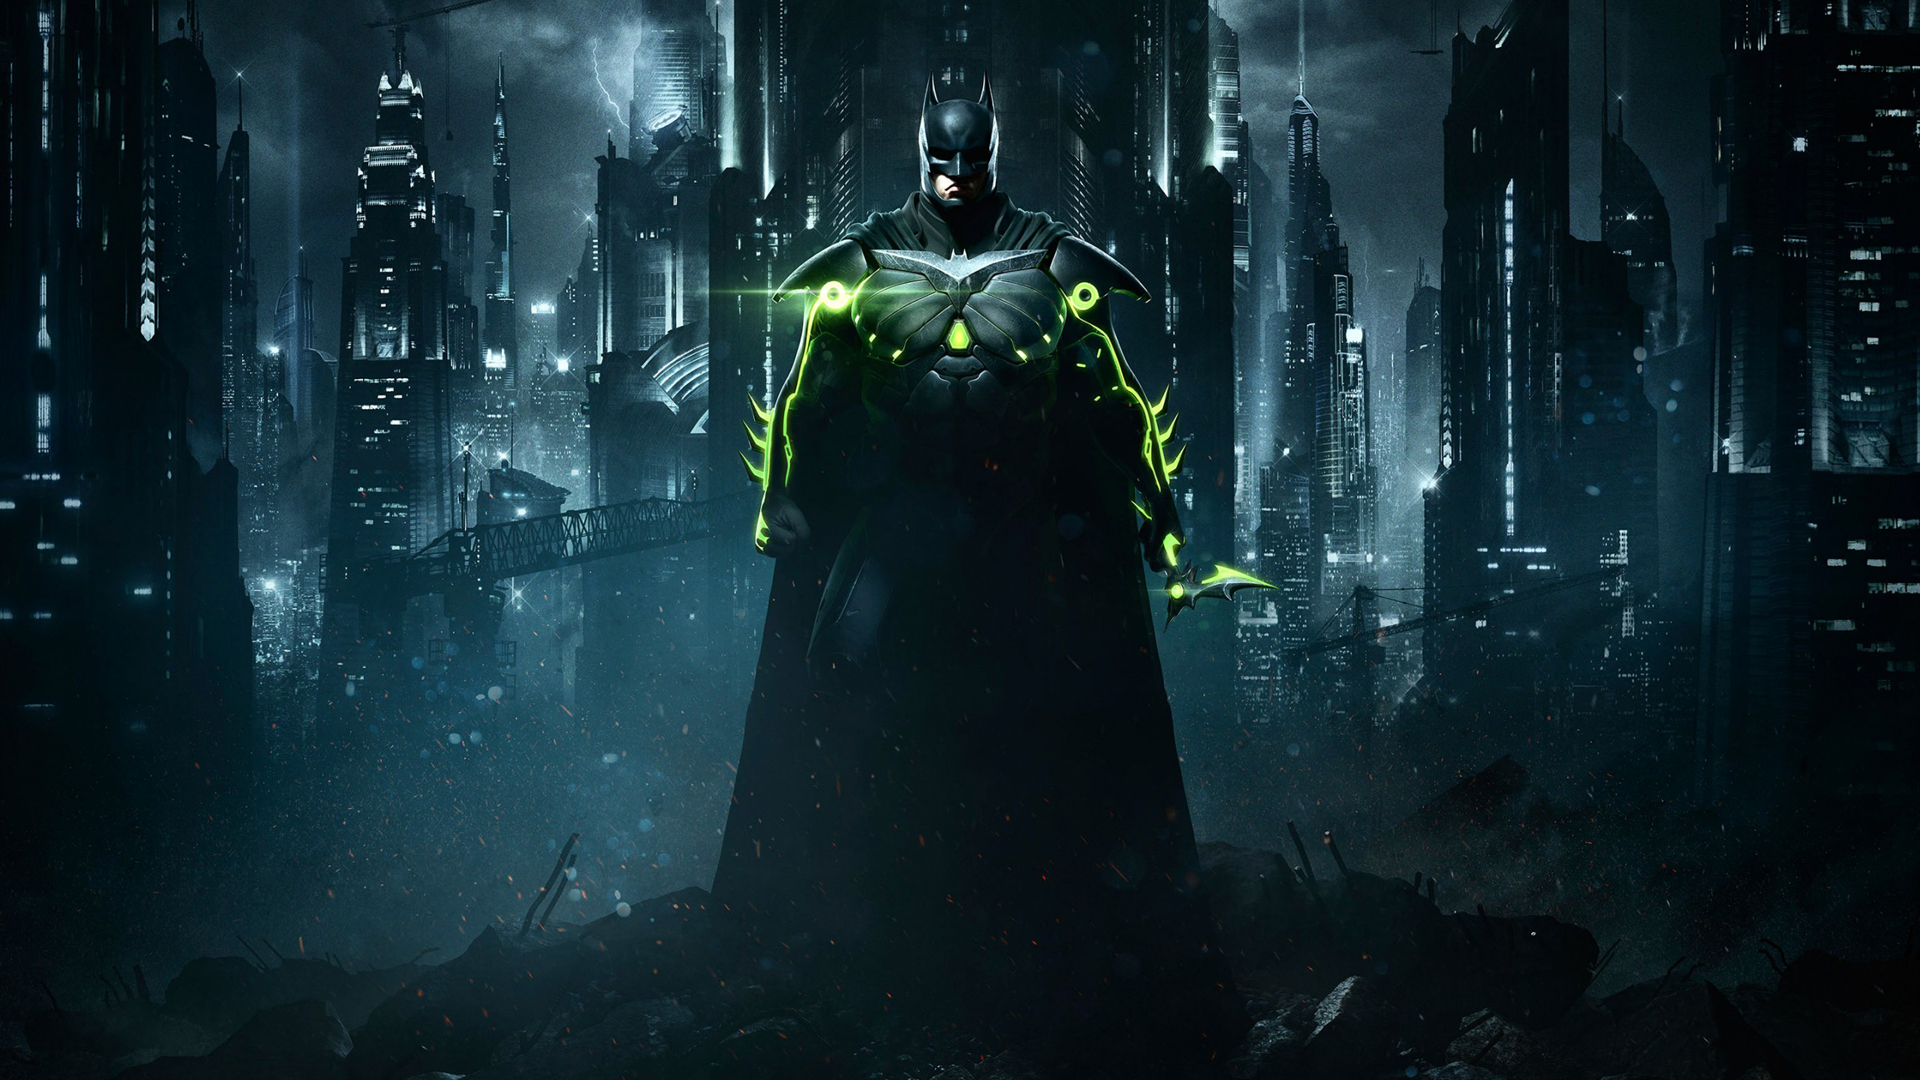 dark, Batman Eternal, Batman mask, city, superhero, bodysuit, armor, city  lights, night, mask, kryptonite | 1920x1080 Wallpaper 